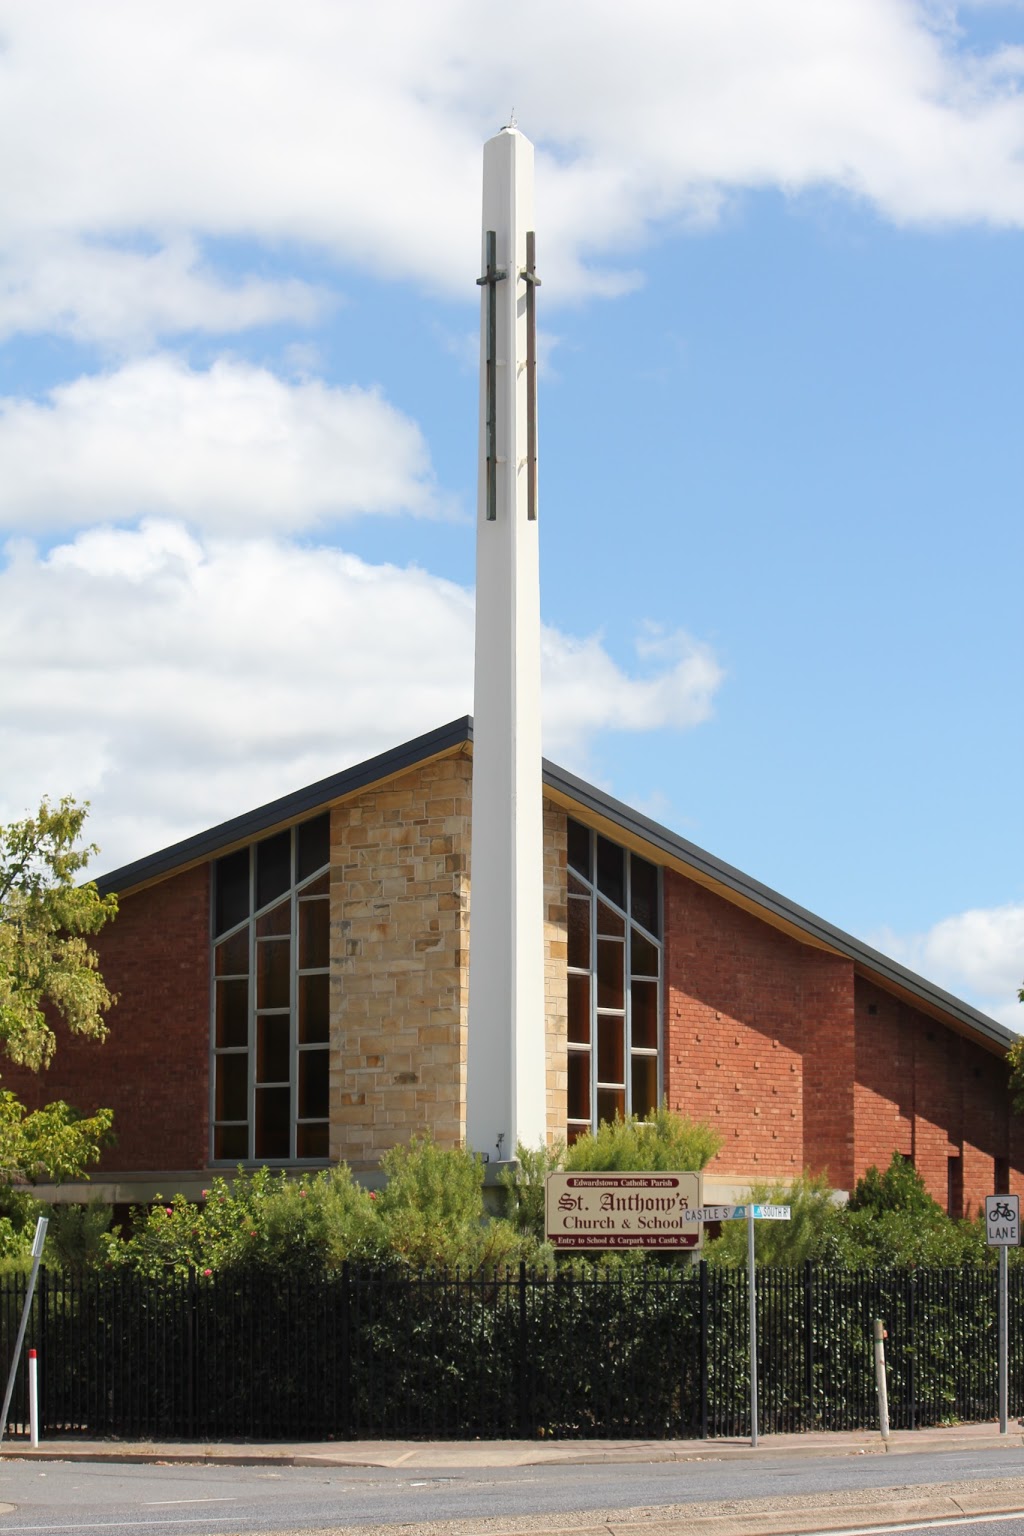 Catholic Parish of Edwardstown | church | 832 South Rd, Edwardstown SA 5039, Australia | 0882971699 OR +61 8 8297 1699